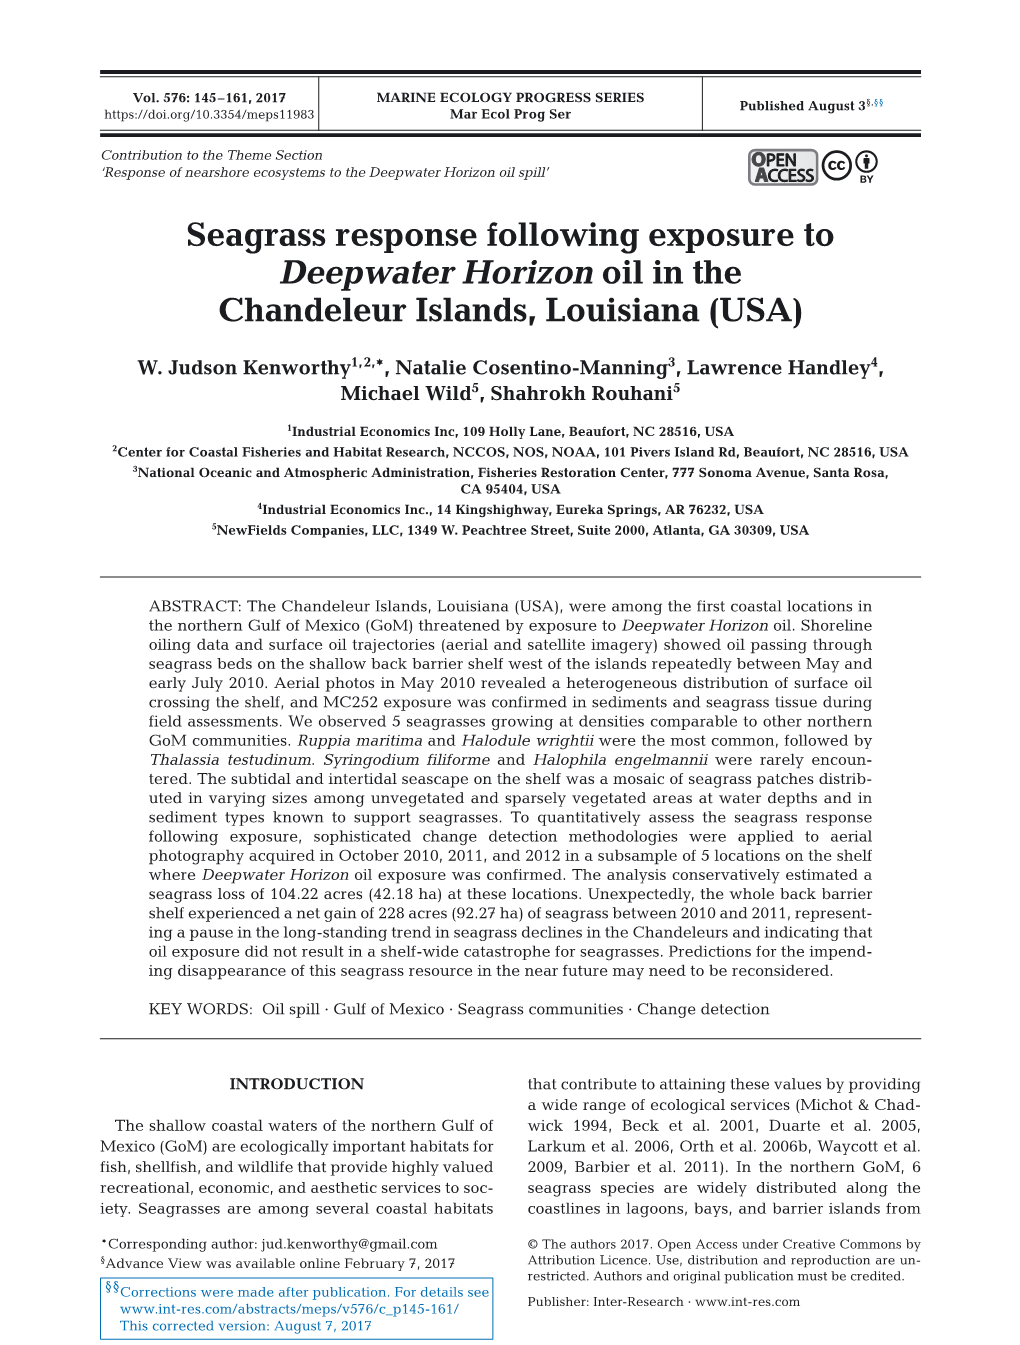 Seagrass Response Following Exposure to Deepwater Horizon Oil in the Chandeleur Islands, Louisiana (USA)